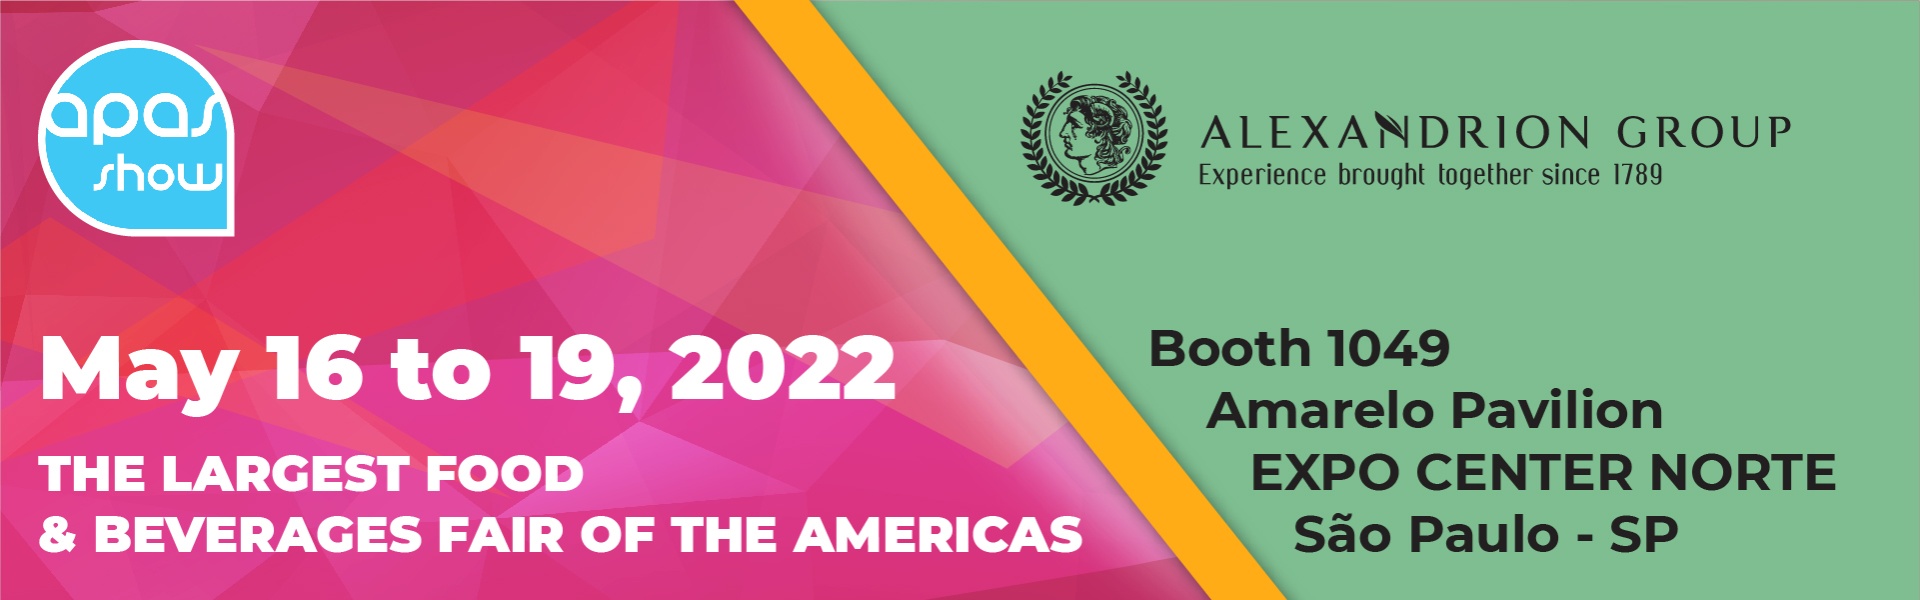 Join us at APAS Show Expo & Congress 2022